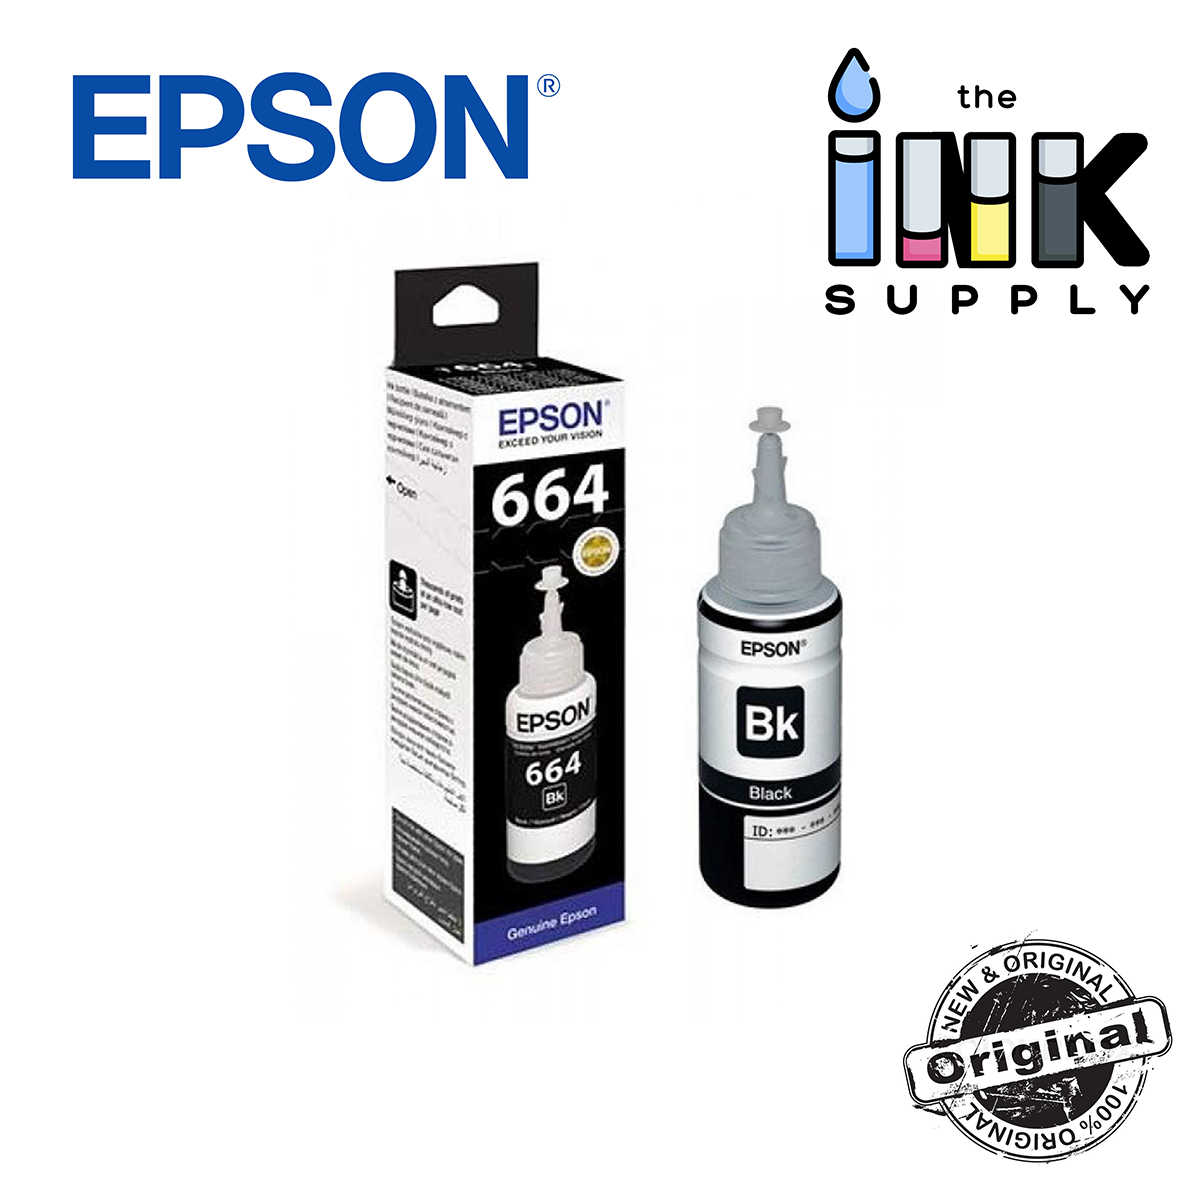 Epson 664 Original Ink Refill T6641 Black Compatible With Ecotank L100 L110 L120 L1300 L200 8790